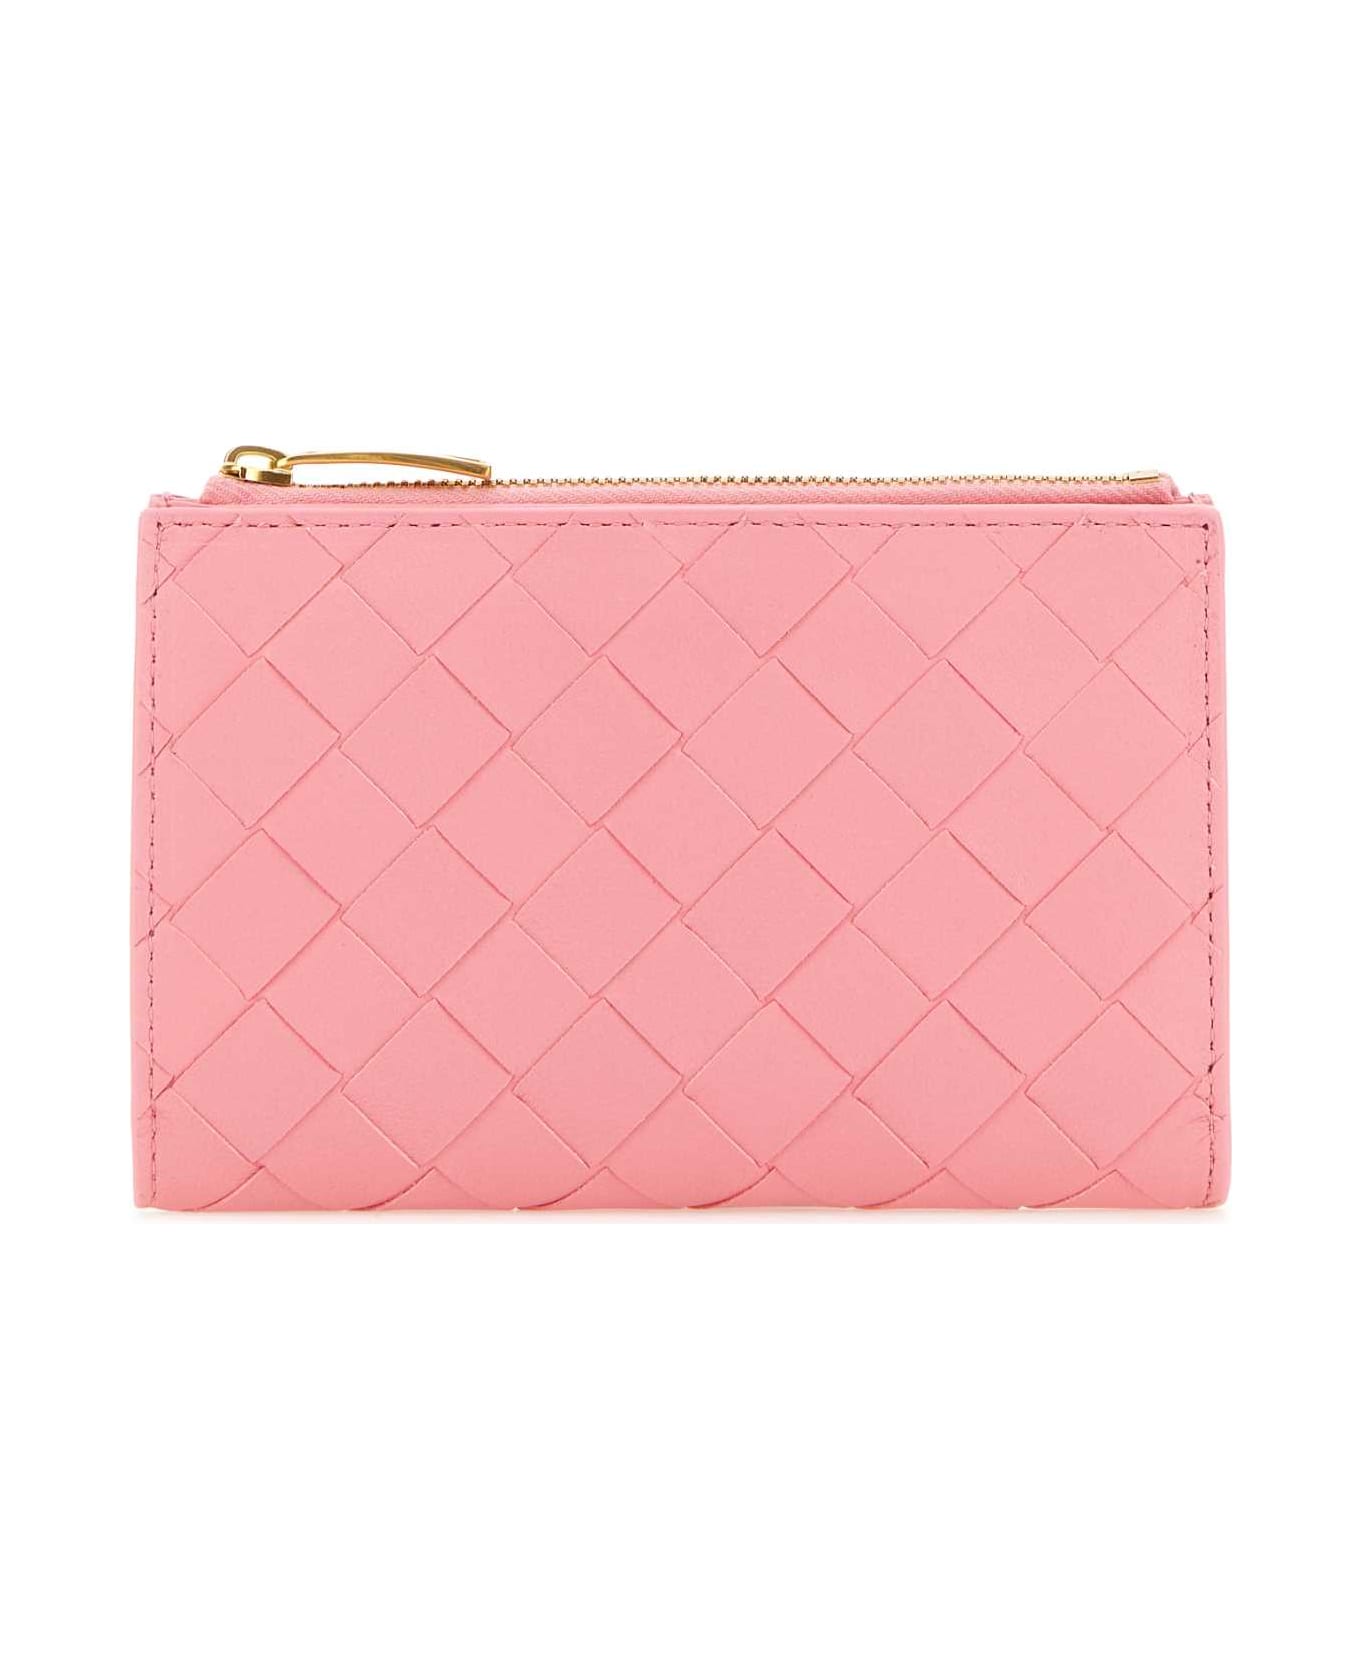 Bottega Veneta Pink Nappa Leather Medium Intrecciato Wallet - PINK 財布